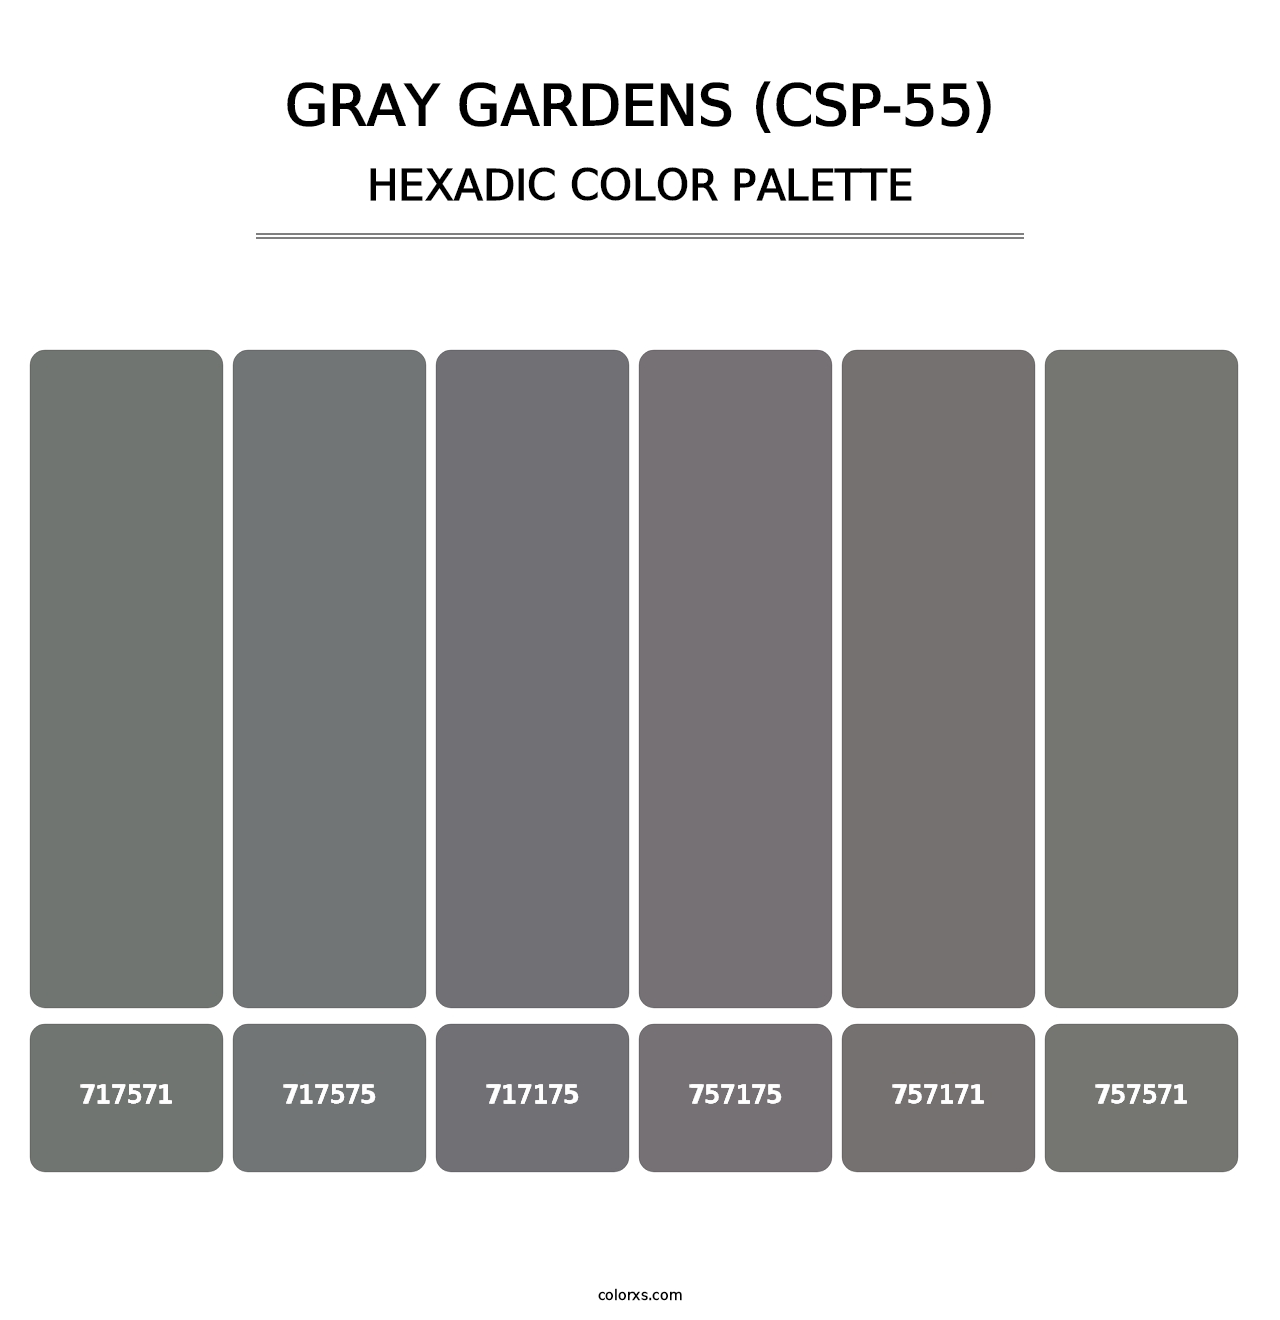 Gray Gardens (CSP-55) - Hexadic Color Palette